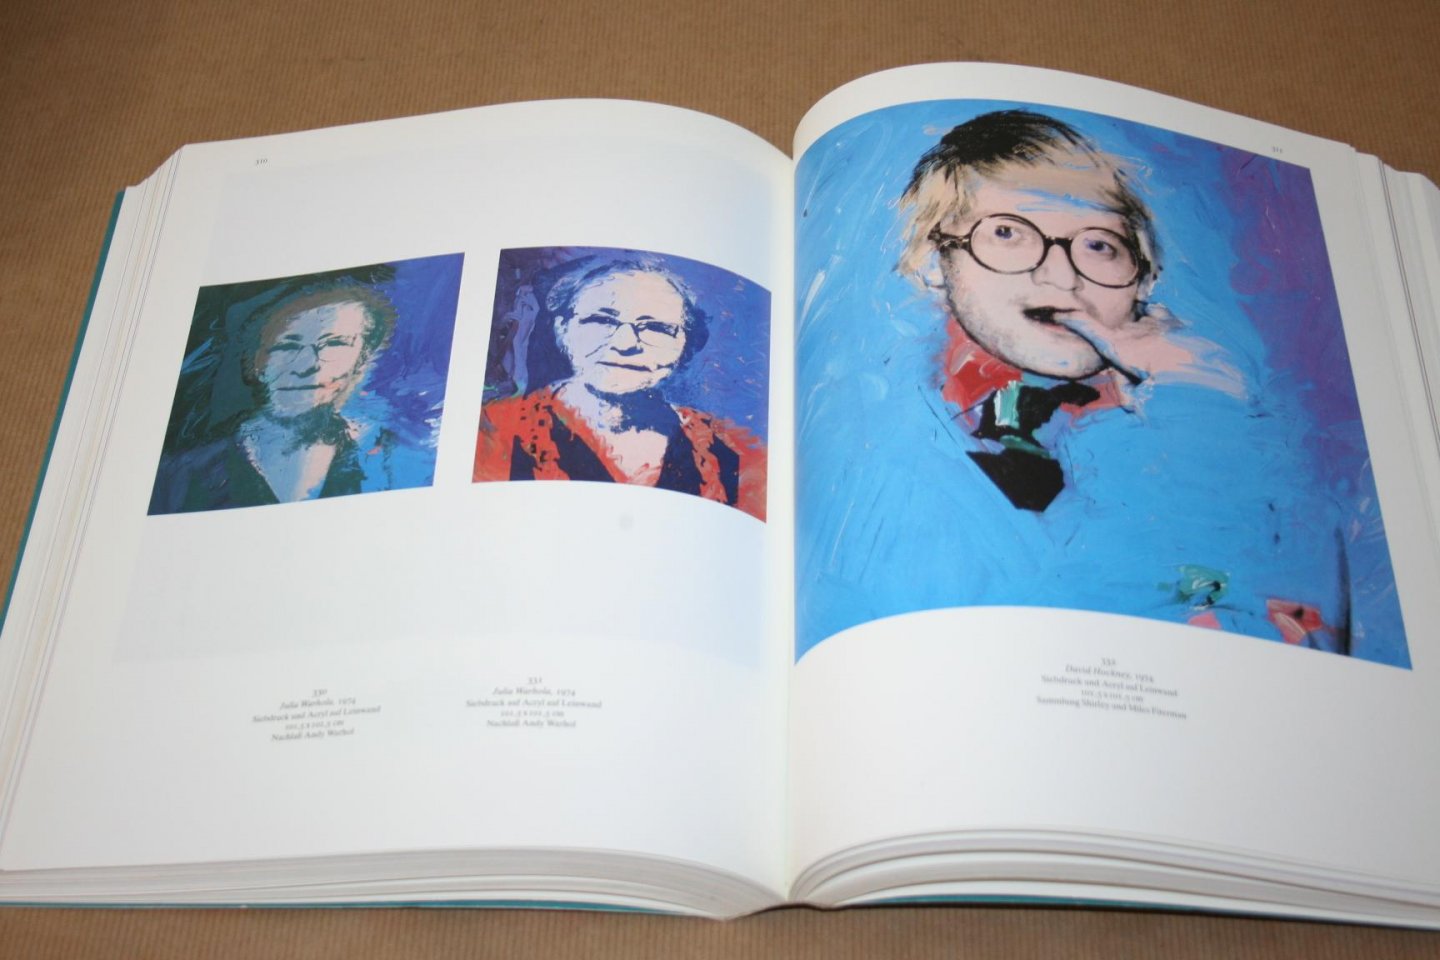 Kynaston McShine - Andy Warhol - Retrospektive  (Museum Ludwig, Köln - 1989)